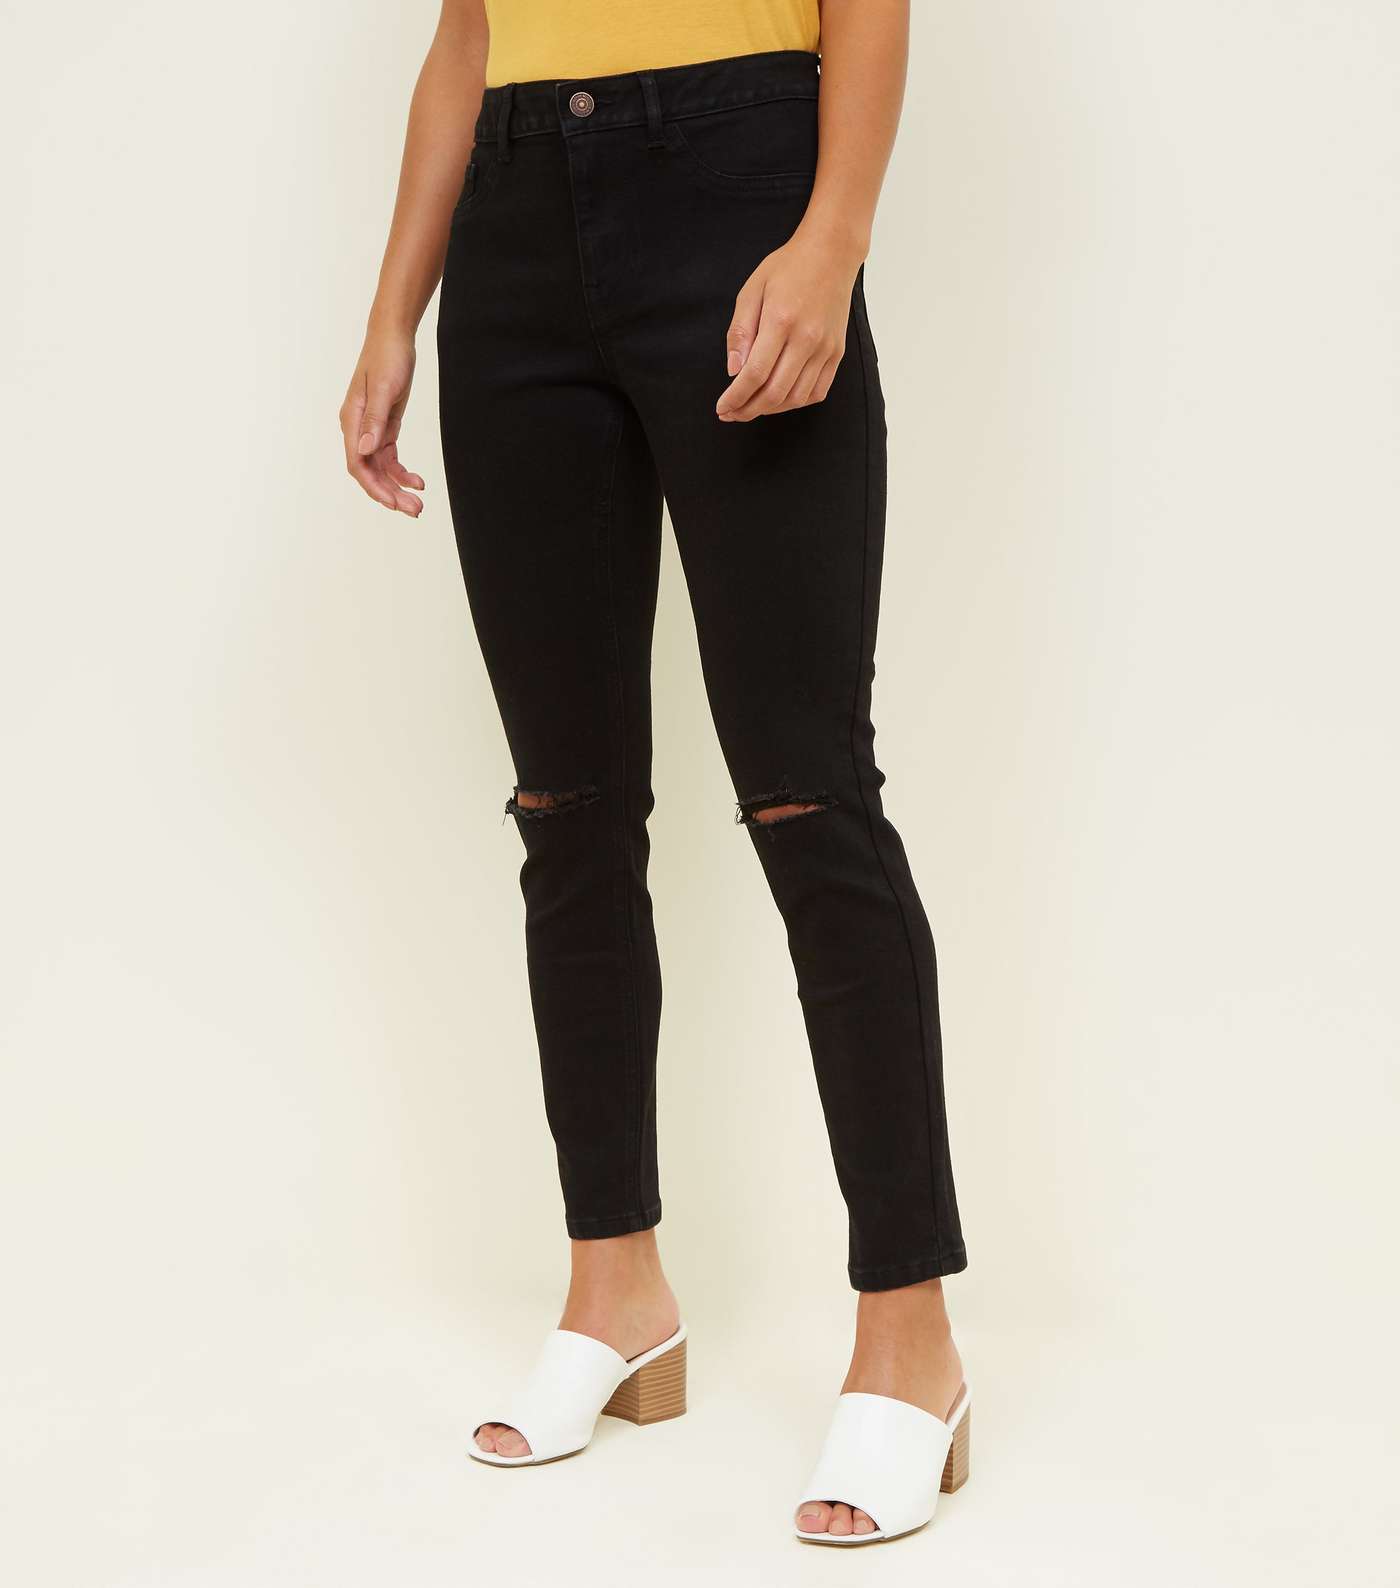 Petite Black  Ripped Knee Jenna Skinny Jeans Image 2